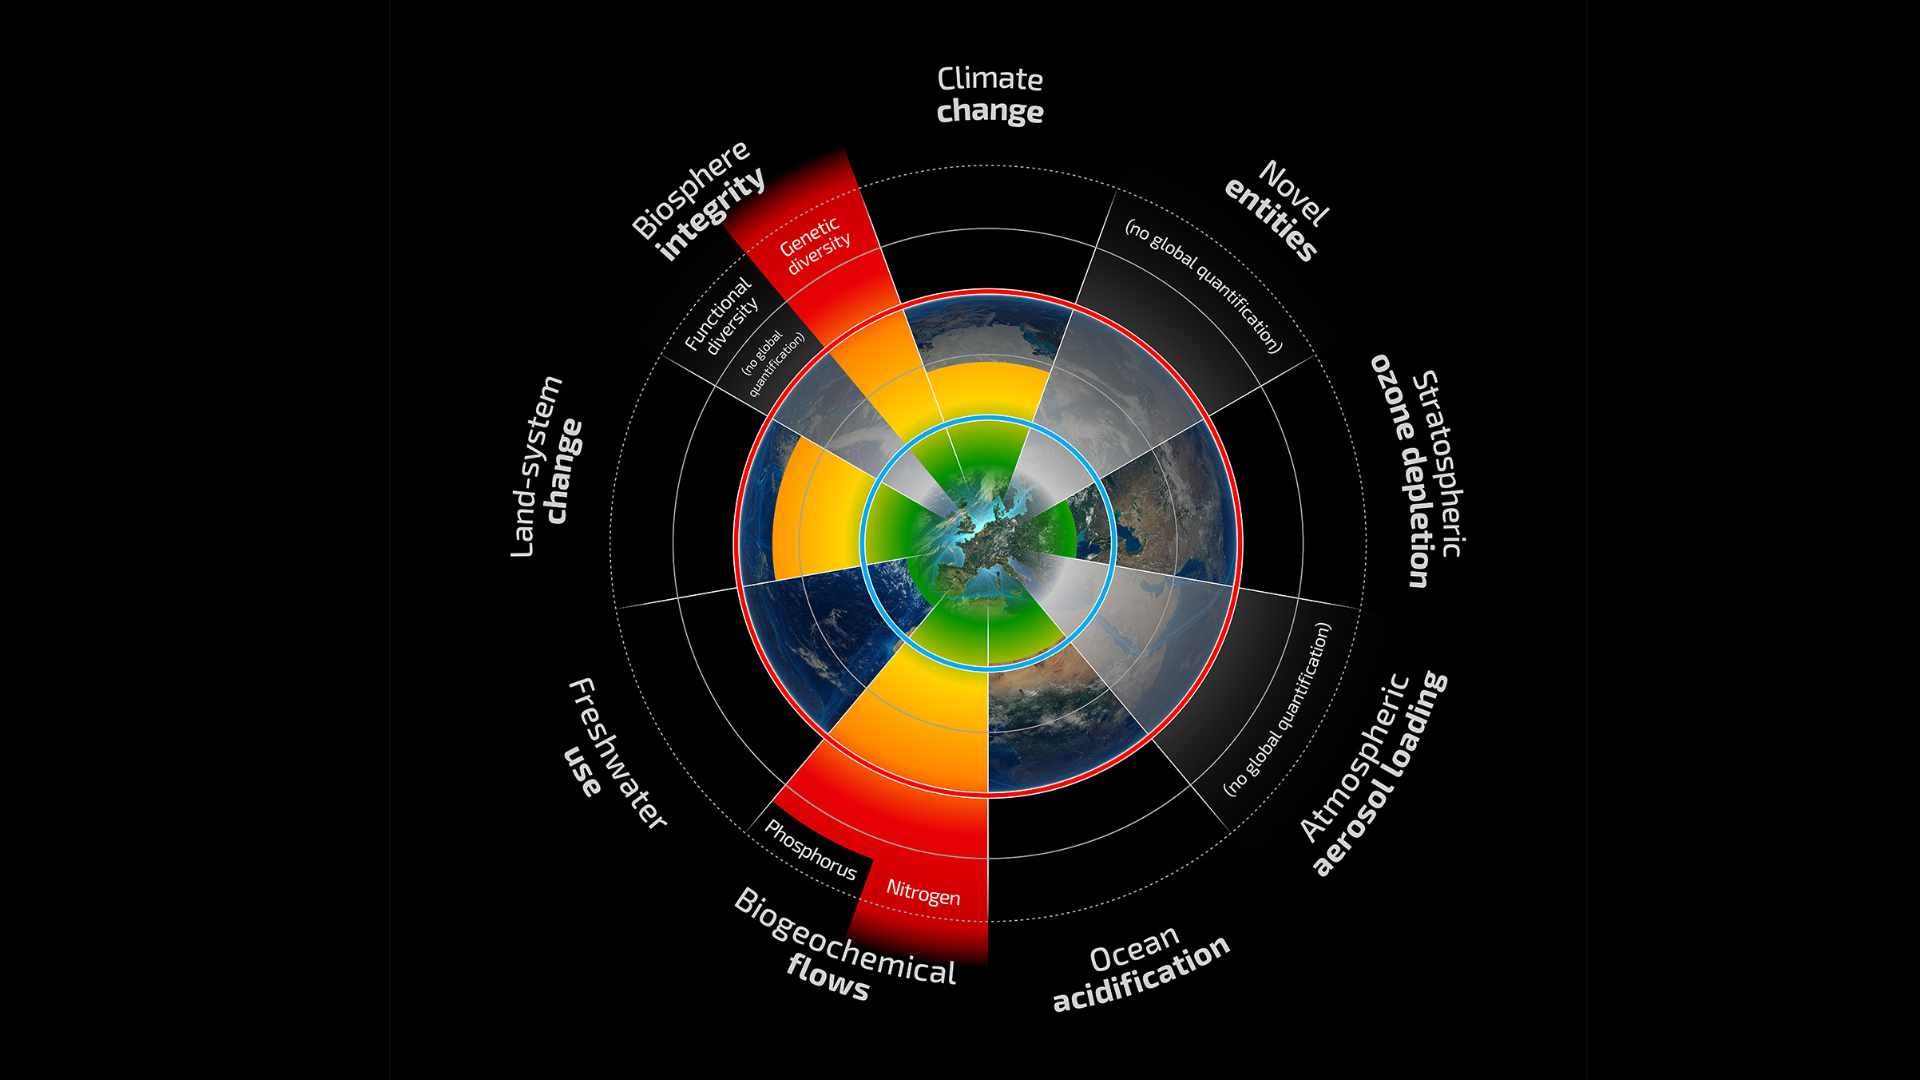 Illustration of the planetary boundaries framework